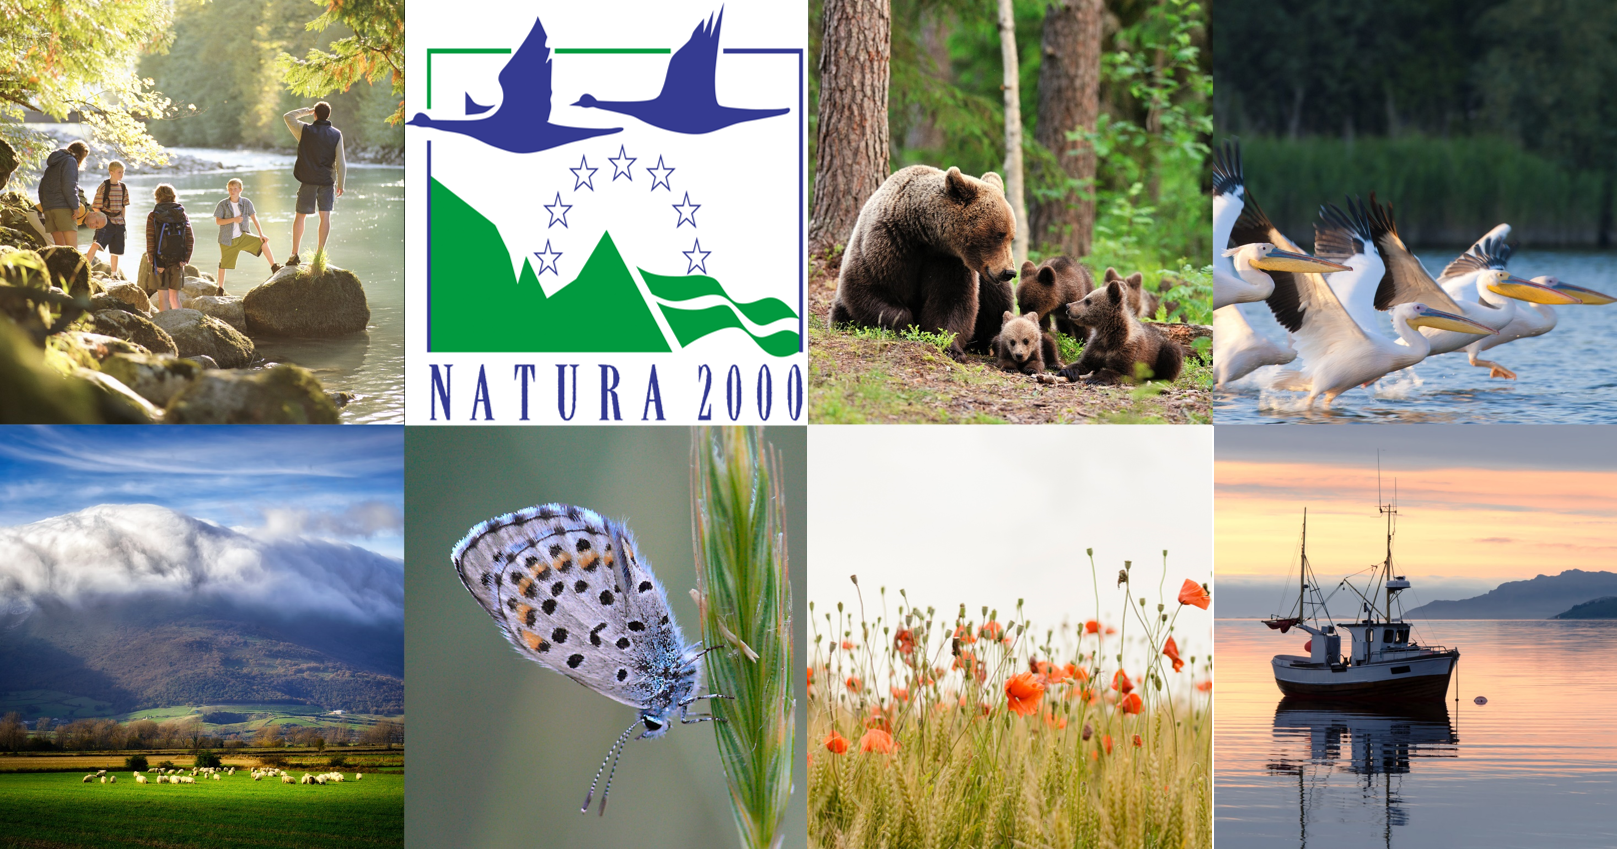 More information about "30 χρόνια Δίκτυο Natura 2000 – 30 εκδηλώσεις εορτασμού του μεγαλύτερου δικτύου προστασίας της φύσης στον κόσμο"